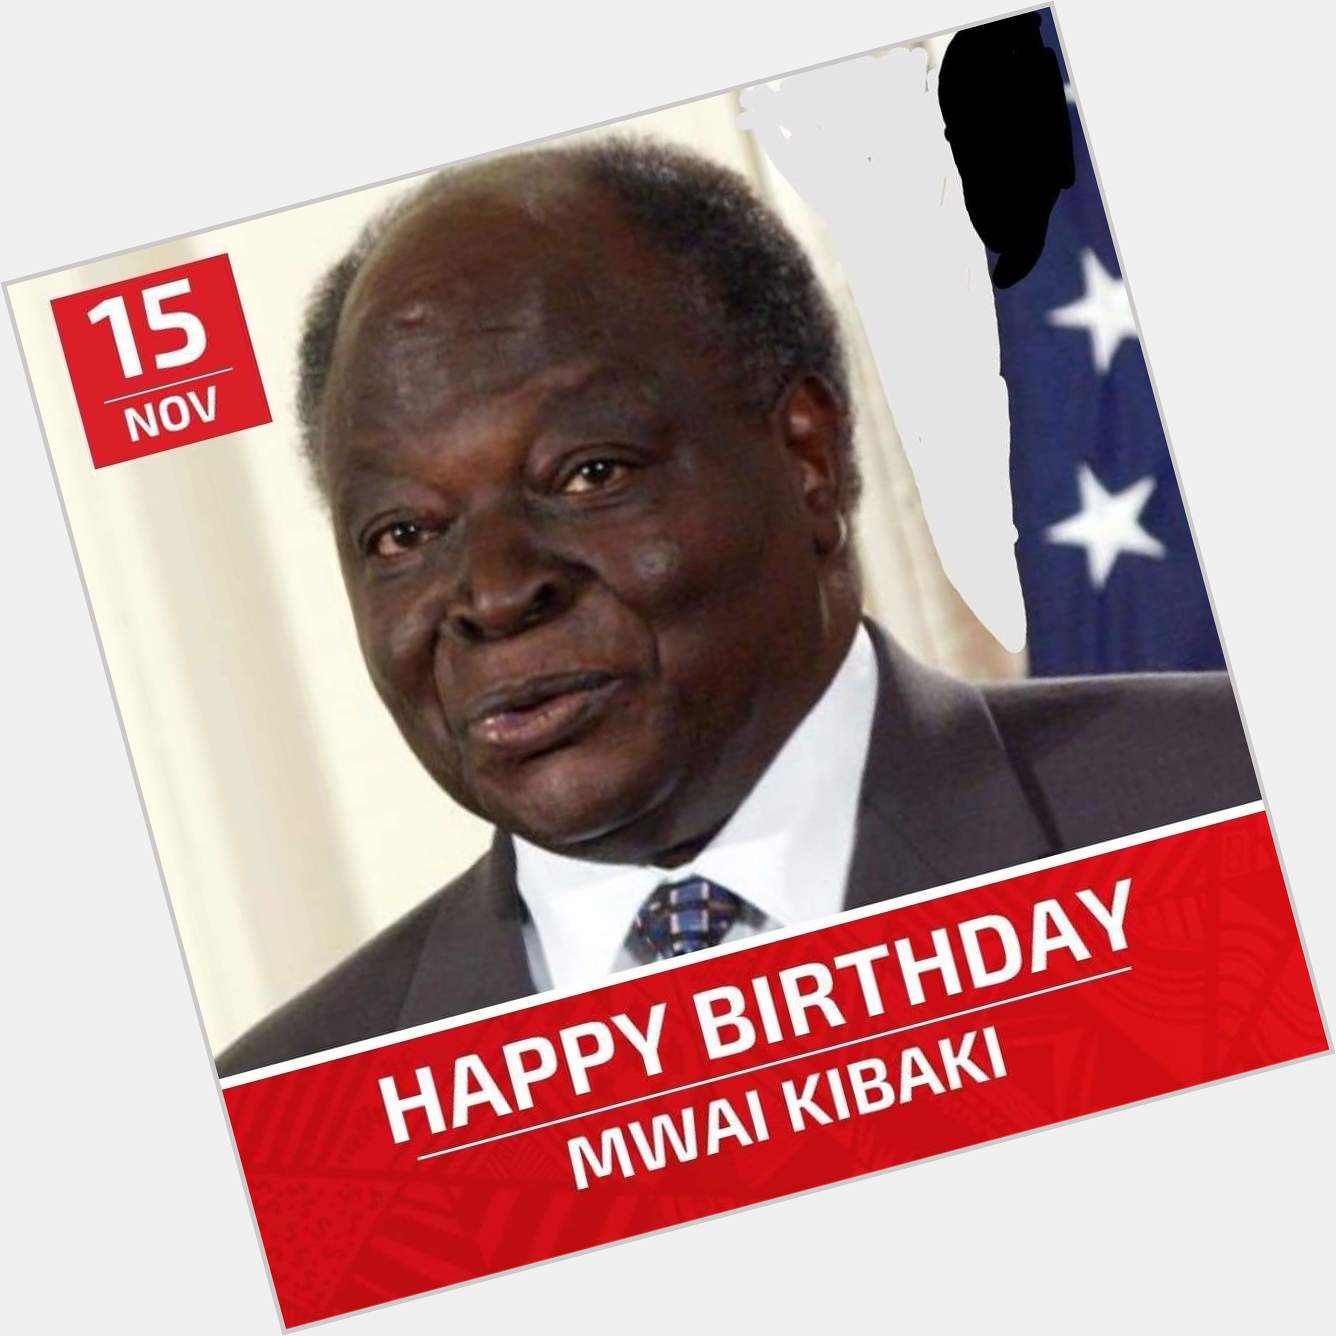 Happy Birthday President Mwai Kibaki. With current Kenya\s economic mess we really miss your leadership 